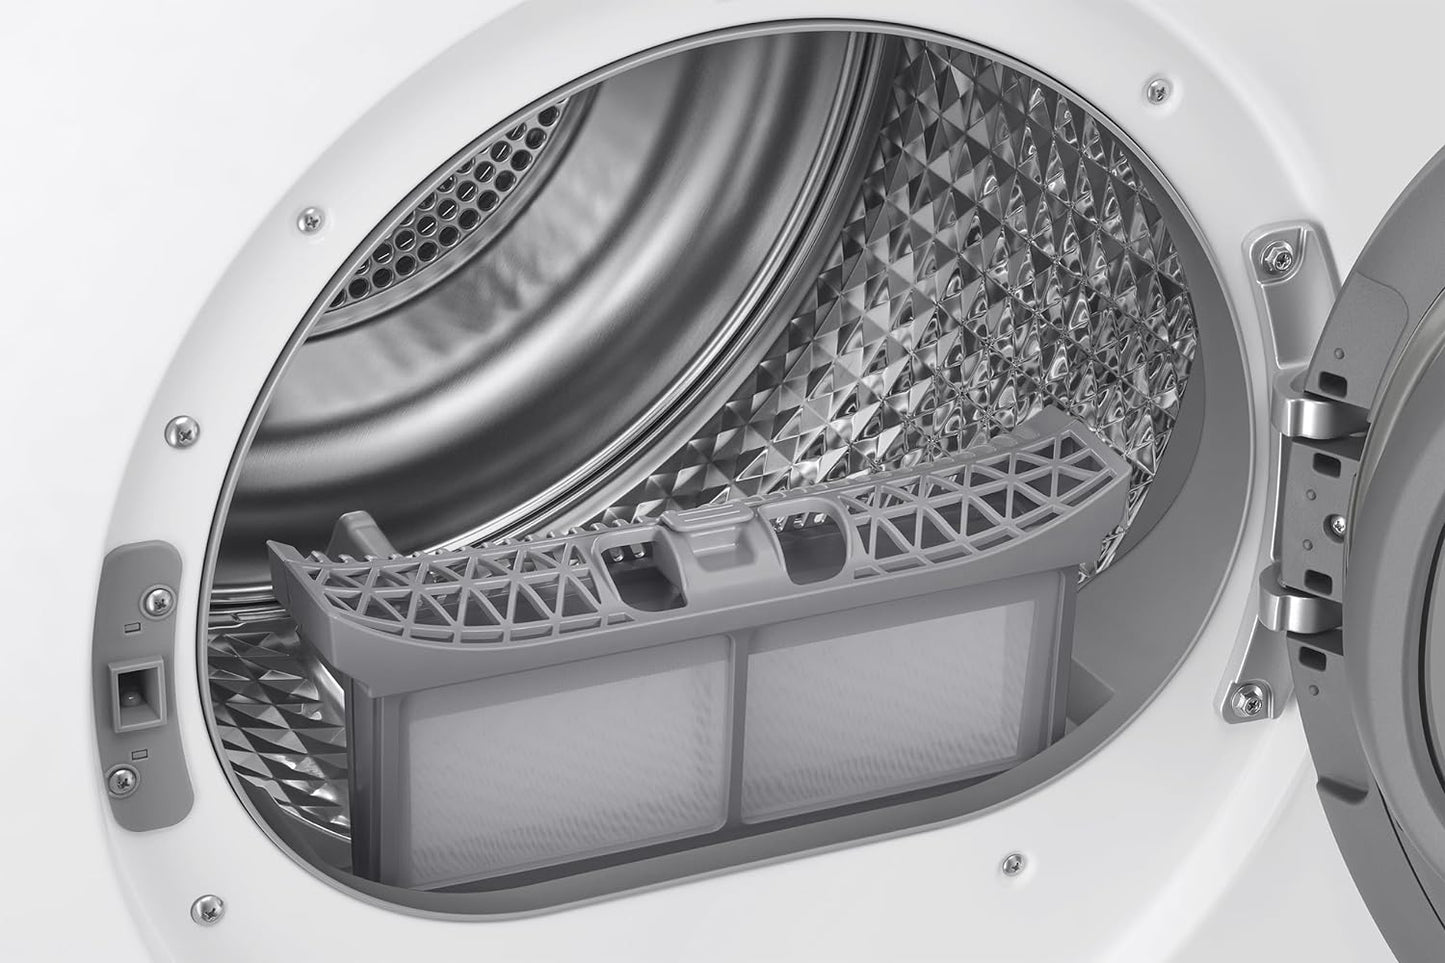 Samsung Dryer, White 9kg, with A+++ Energy Efficiency, QuickDrive, AI Dry, DV90BB9440GHGU, 20 Year Warranty on Digital Inverter Motor